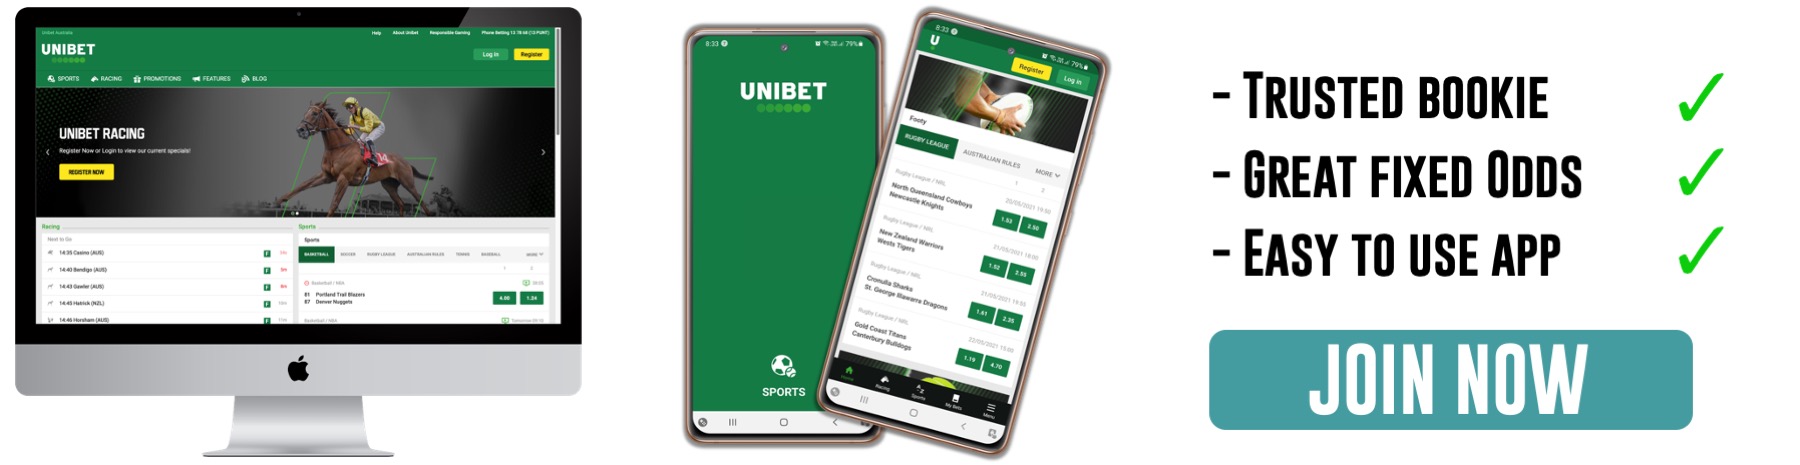 Unibet Betting Site